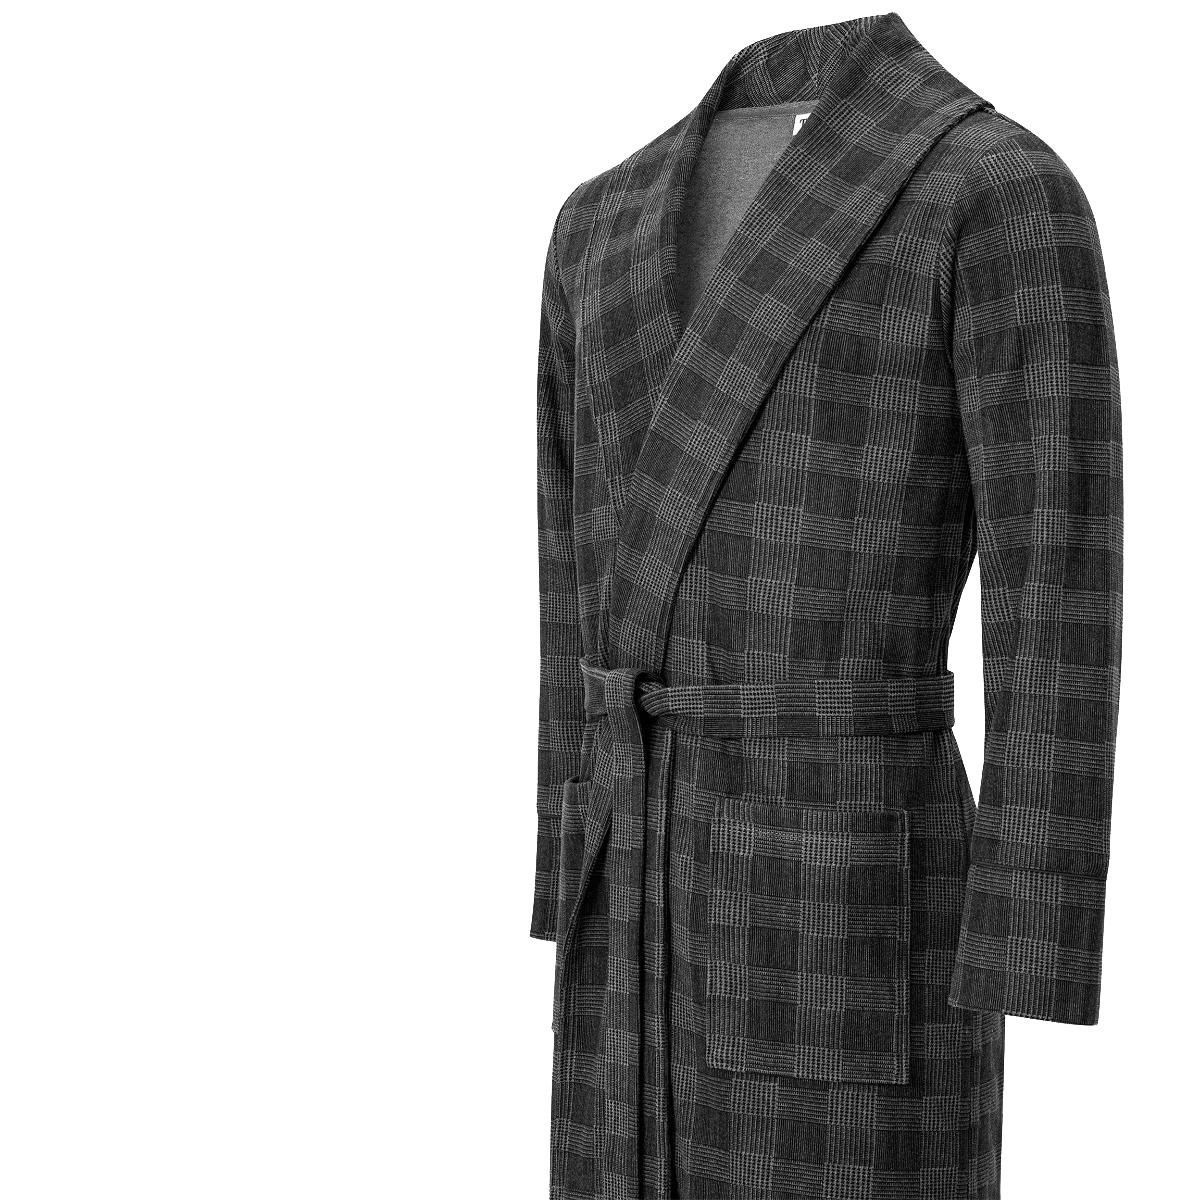 Домашний костюм Togas Рикон серый L, цвет тёмно-серый, размер L - фото 3